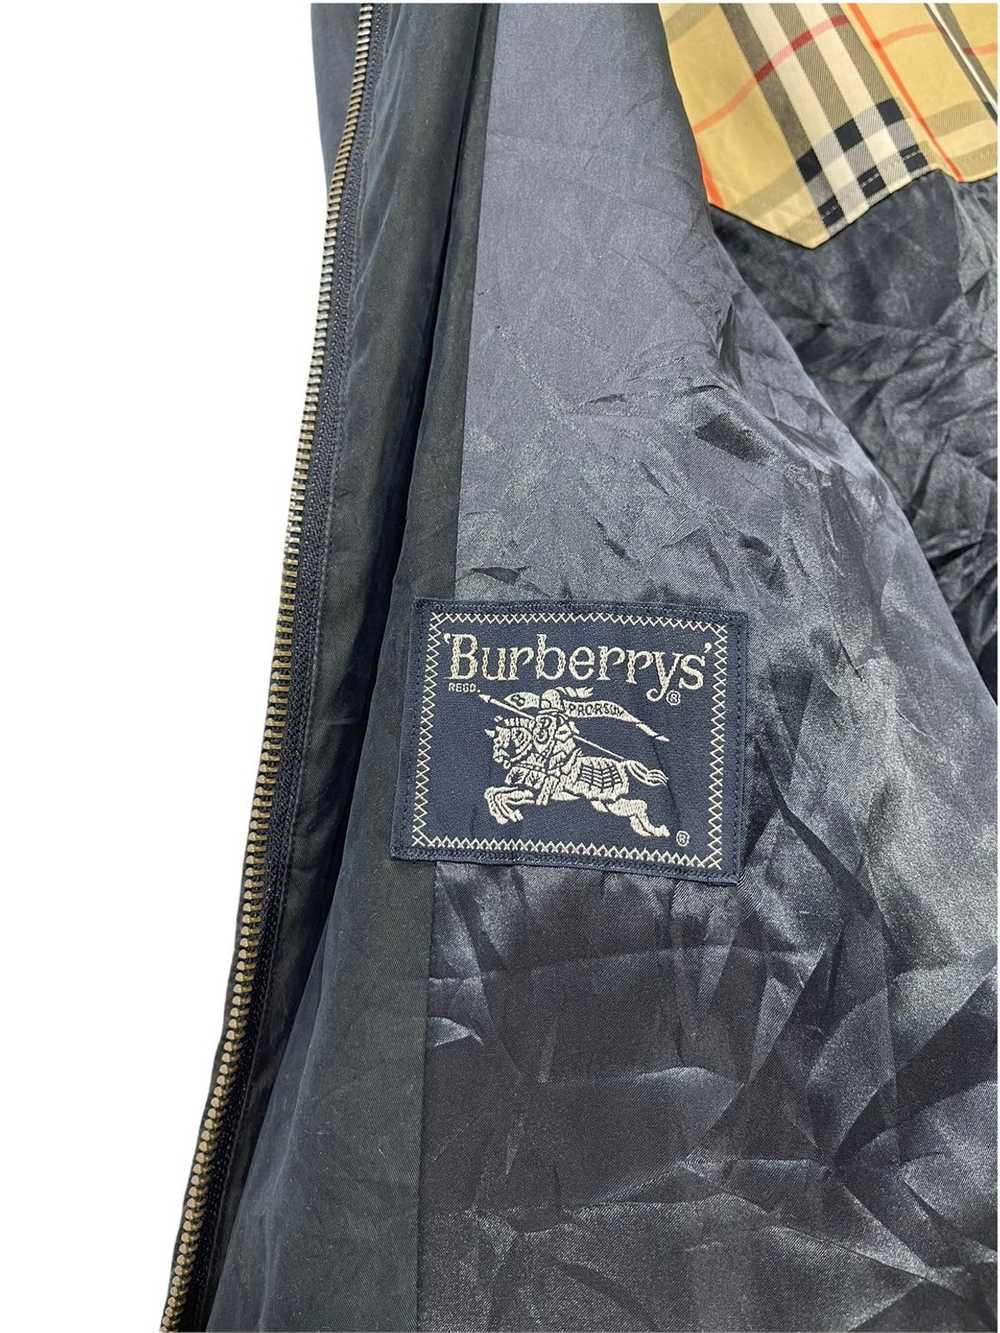 Burberry Vtg 90s Burberry’s Parka Padding 19🟩 - image 5